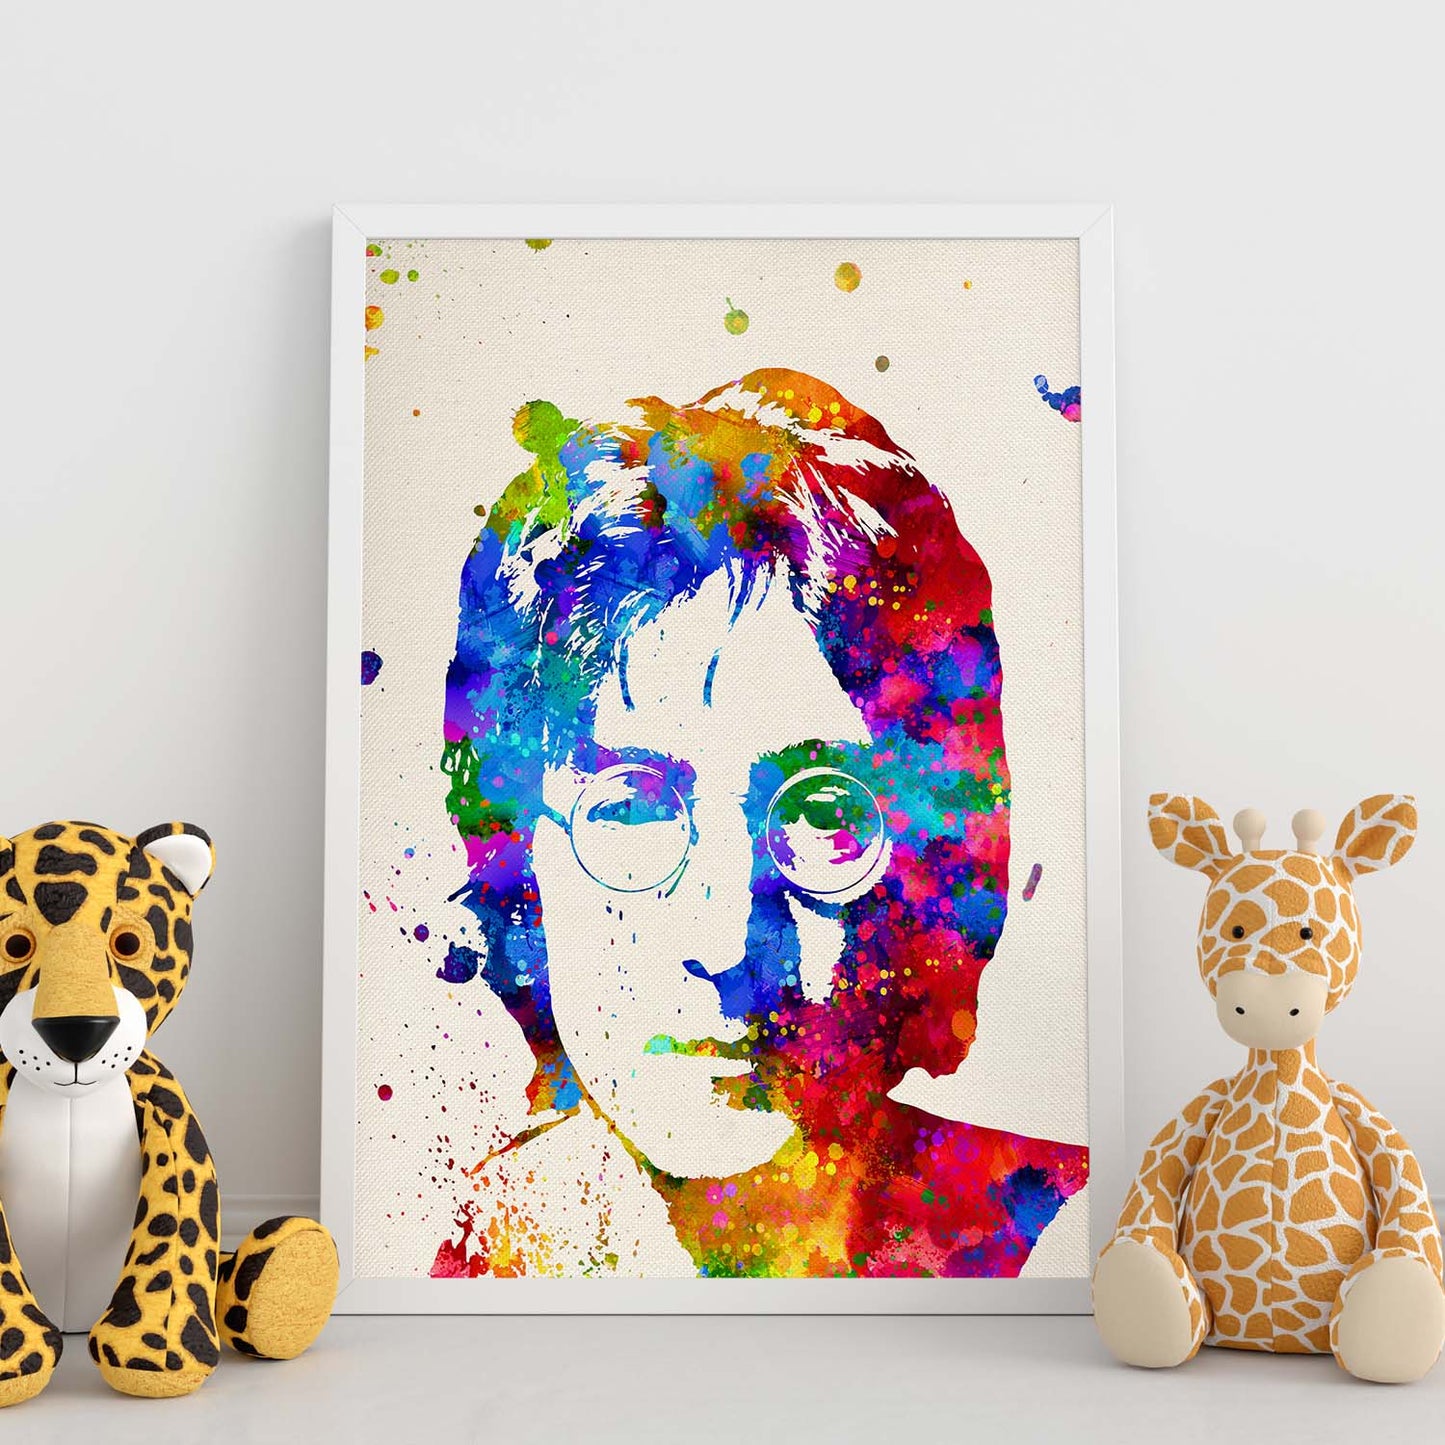 Poster imagen de John Lennon. Posters con diseño acuarela de famosos, actores, músicos-Artwork-Nacnic-Nacnic Estudio SL